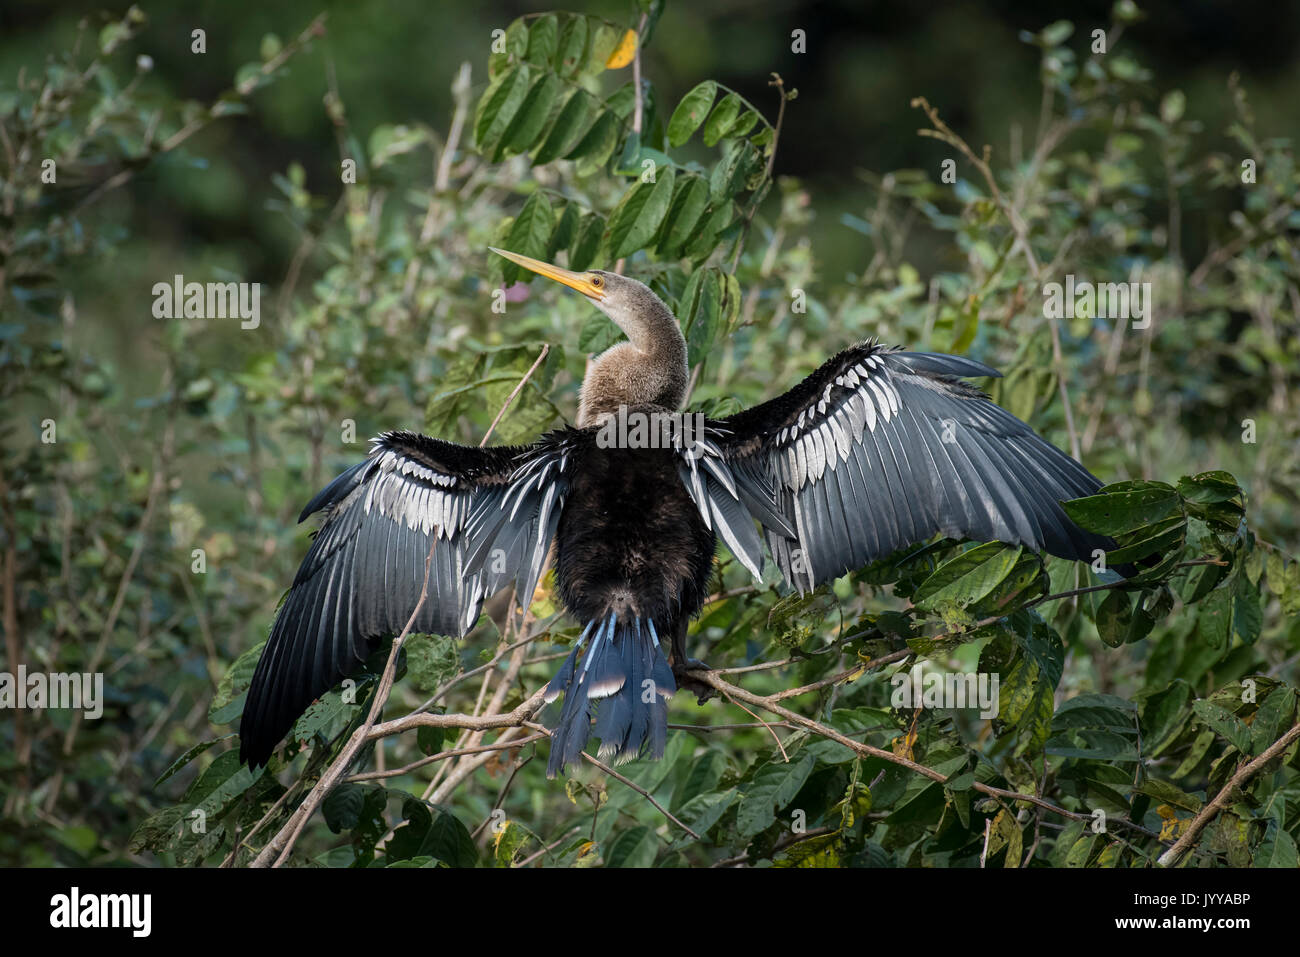 Anhinga oder Wasser Türkei (Anhinga anhinga) trocknet Gefieder in Baum, Pantanal, Mato Grosso do Sul, Brasilien Stockfoto